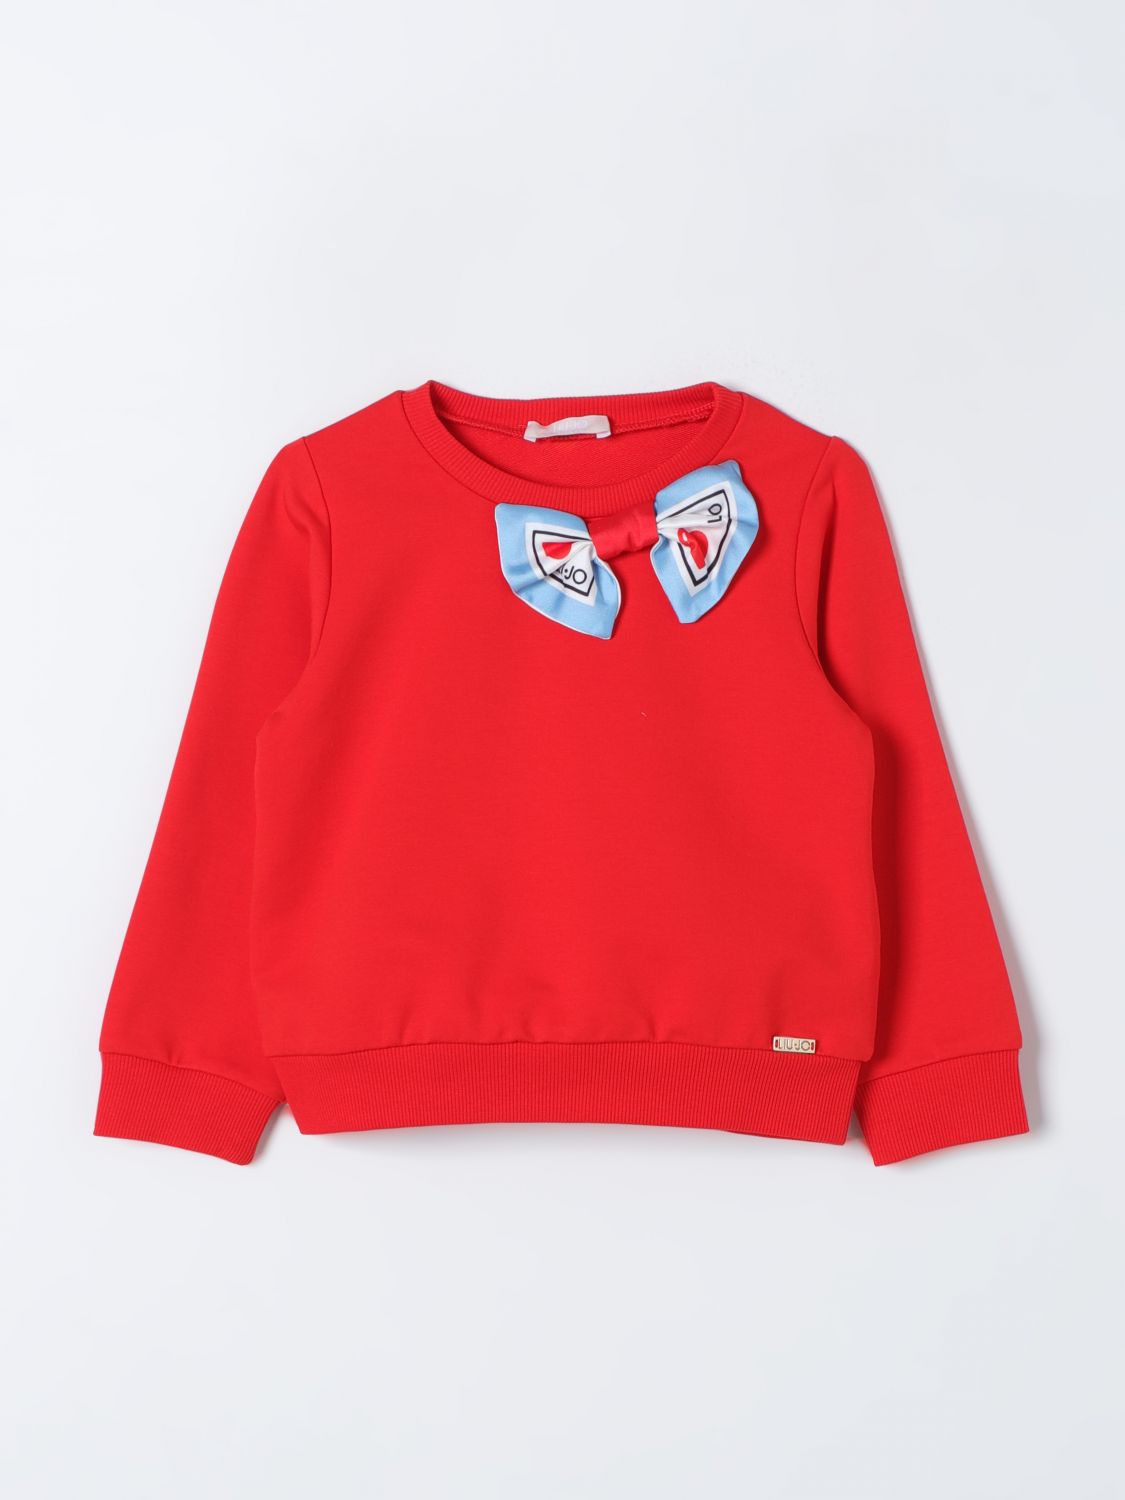 Shop Liu •jo Sweater Liu Jo Kids Kids Color Red